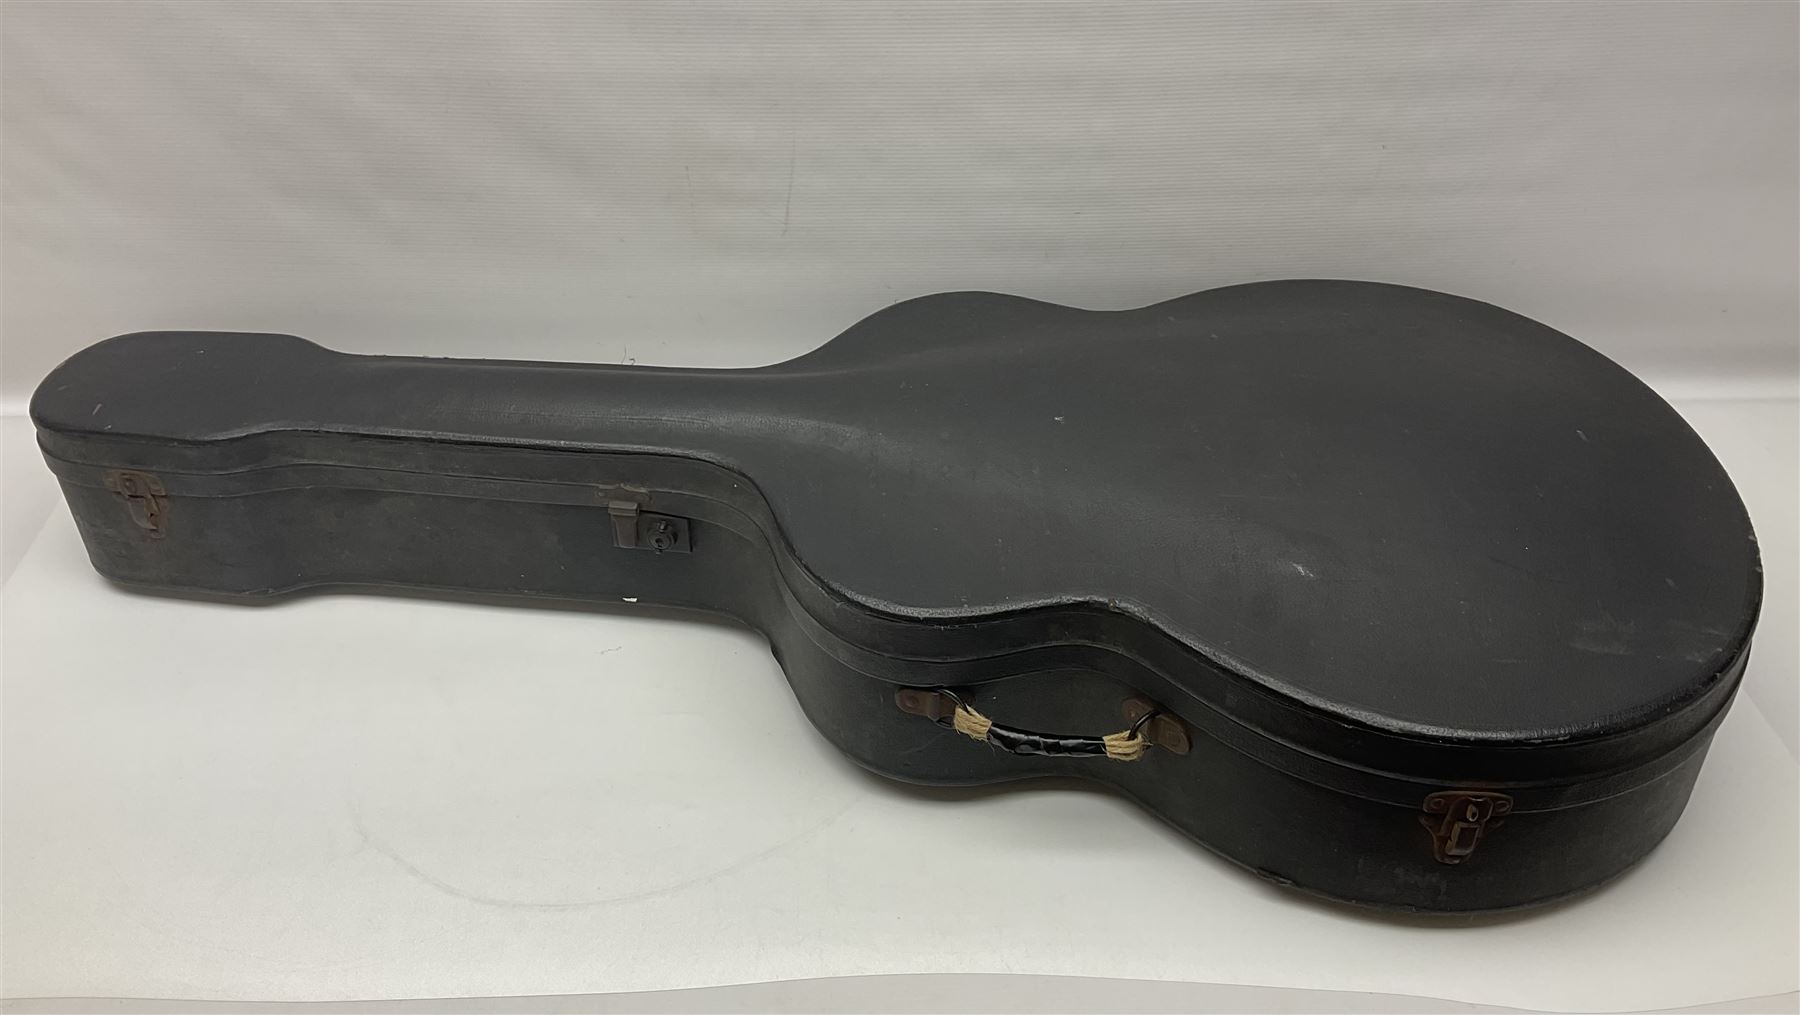 Clifford Essex Paragon De Luxe handmade acoustic guitar c1936 with tobacco sunburst finish and origi - Image 23 of 24